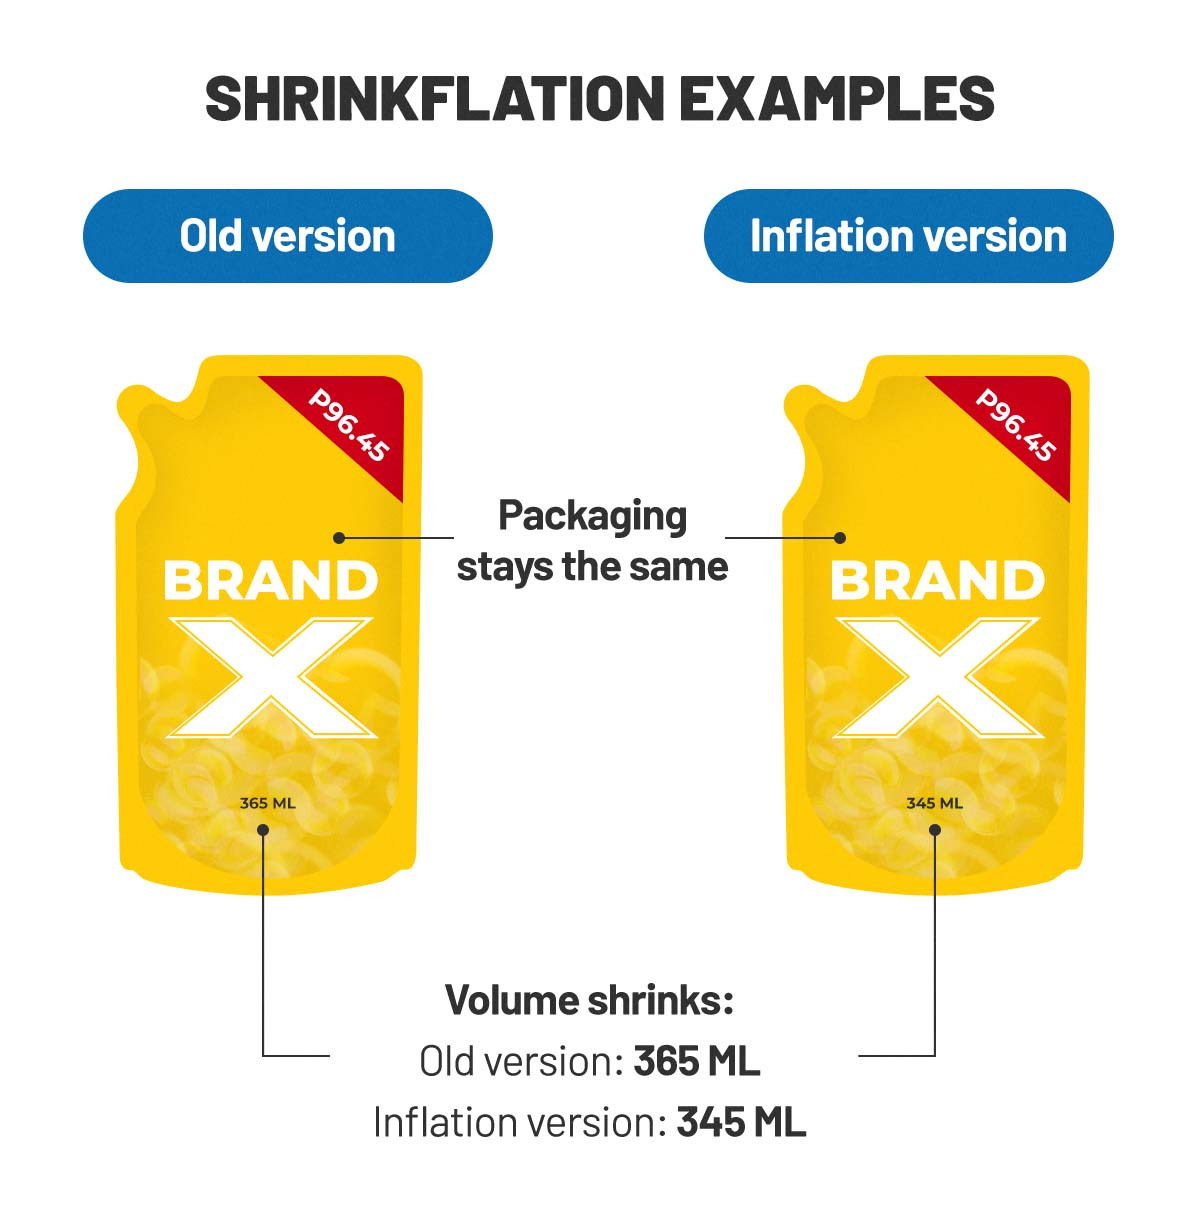 Shrinkflation examples